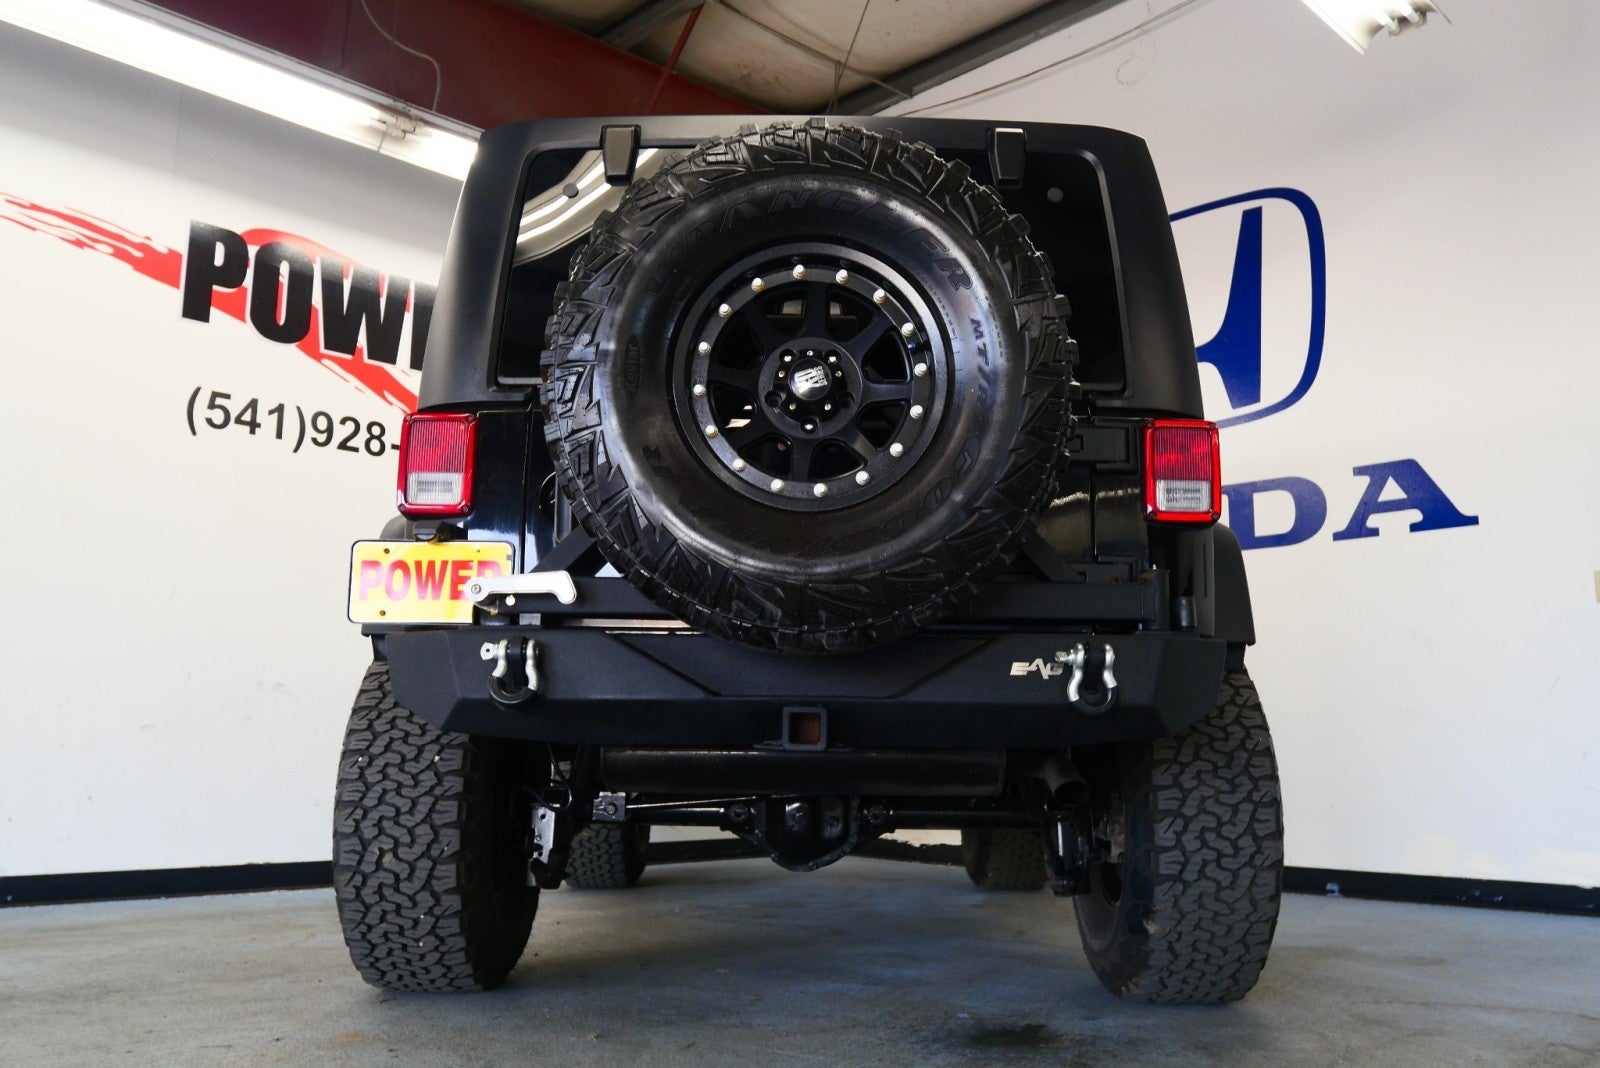 2013 Jeep Wrangler Freedom Edition